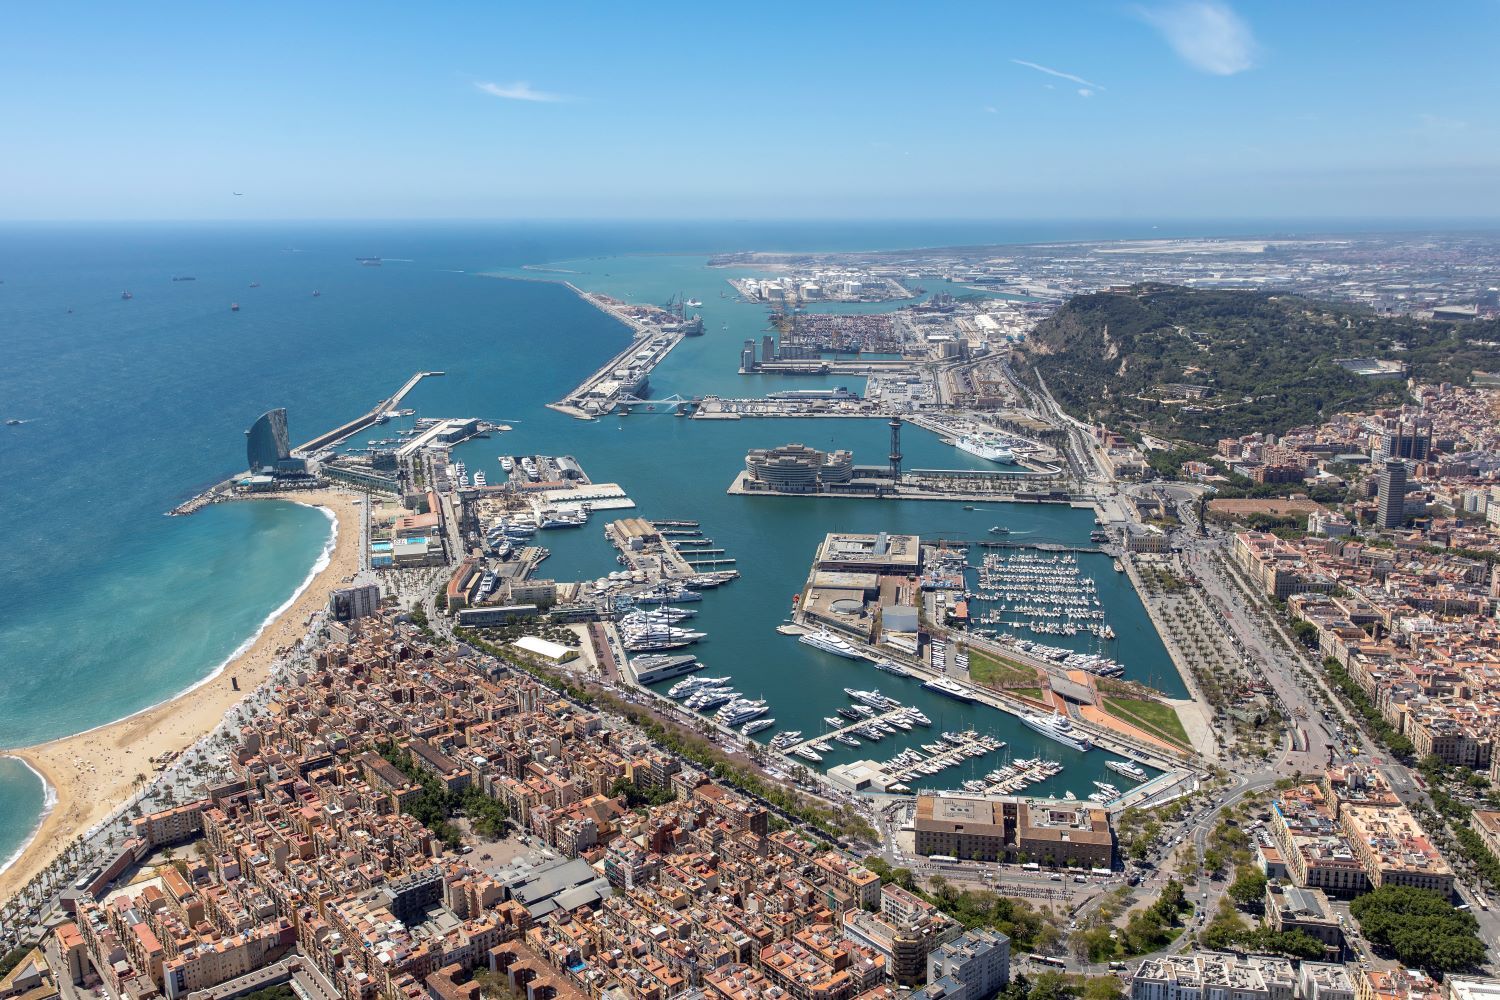 The challenge of port-city integration